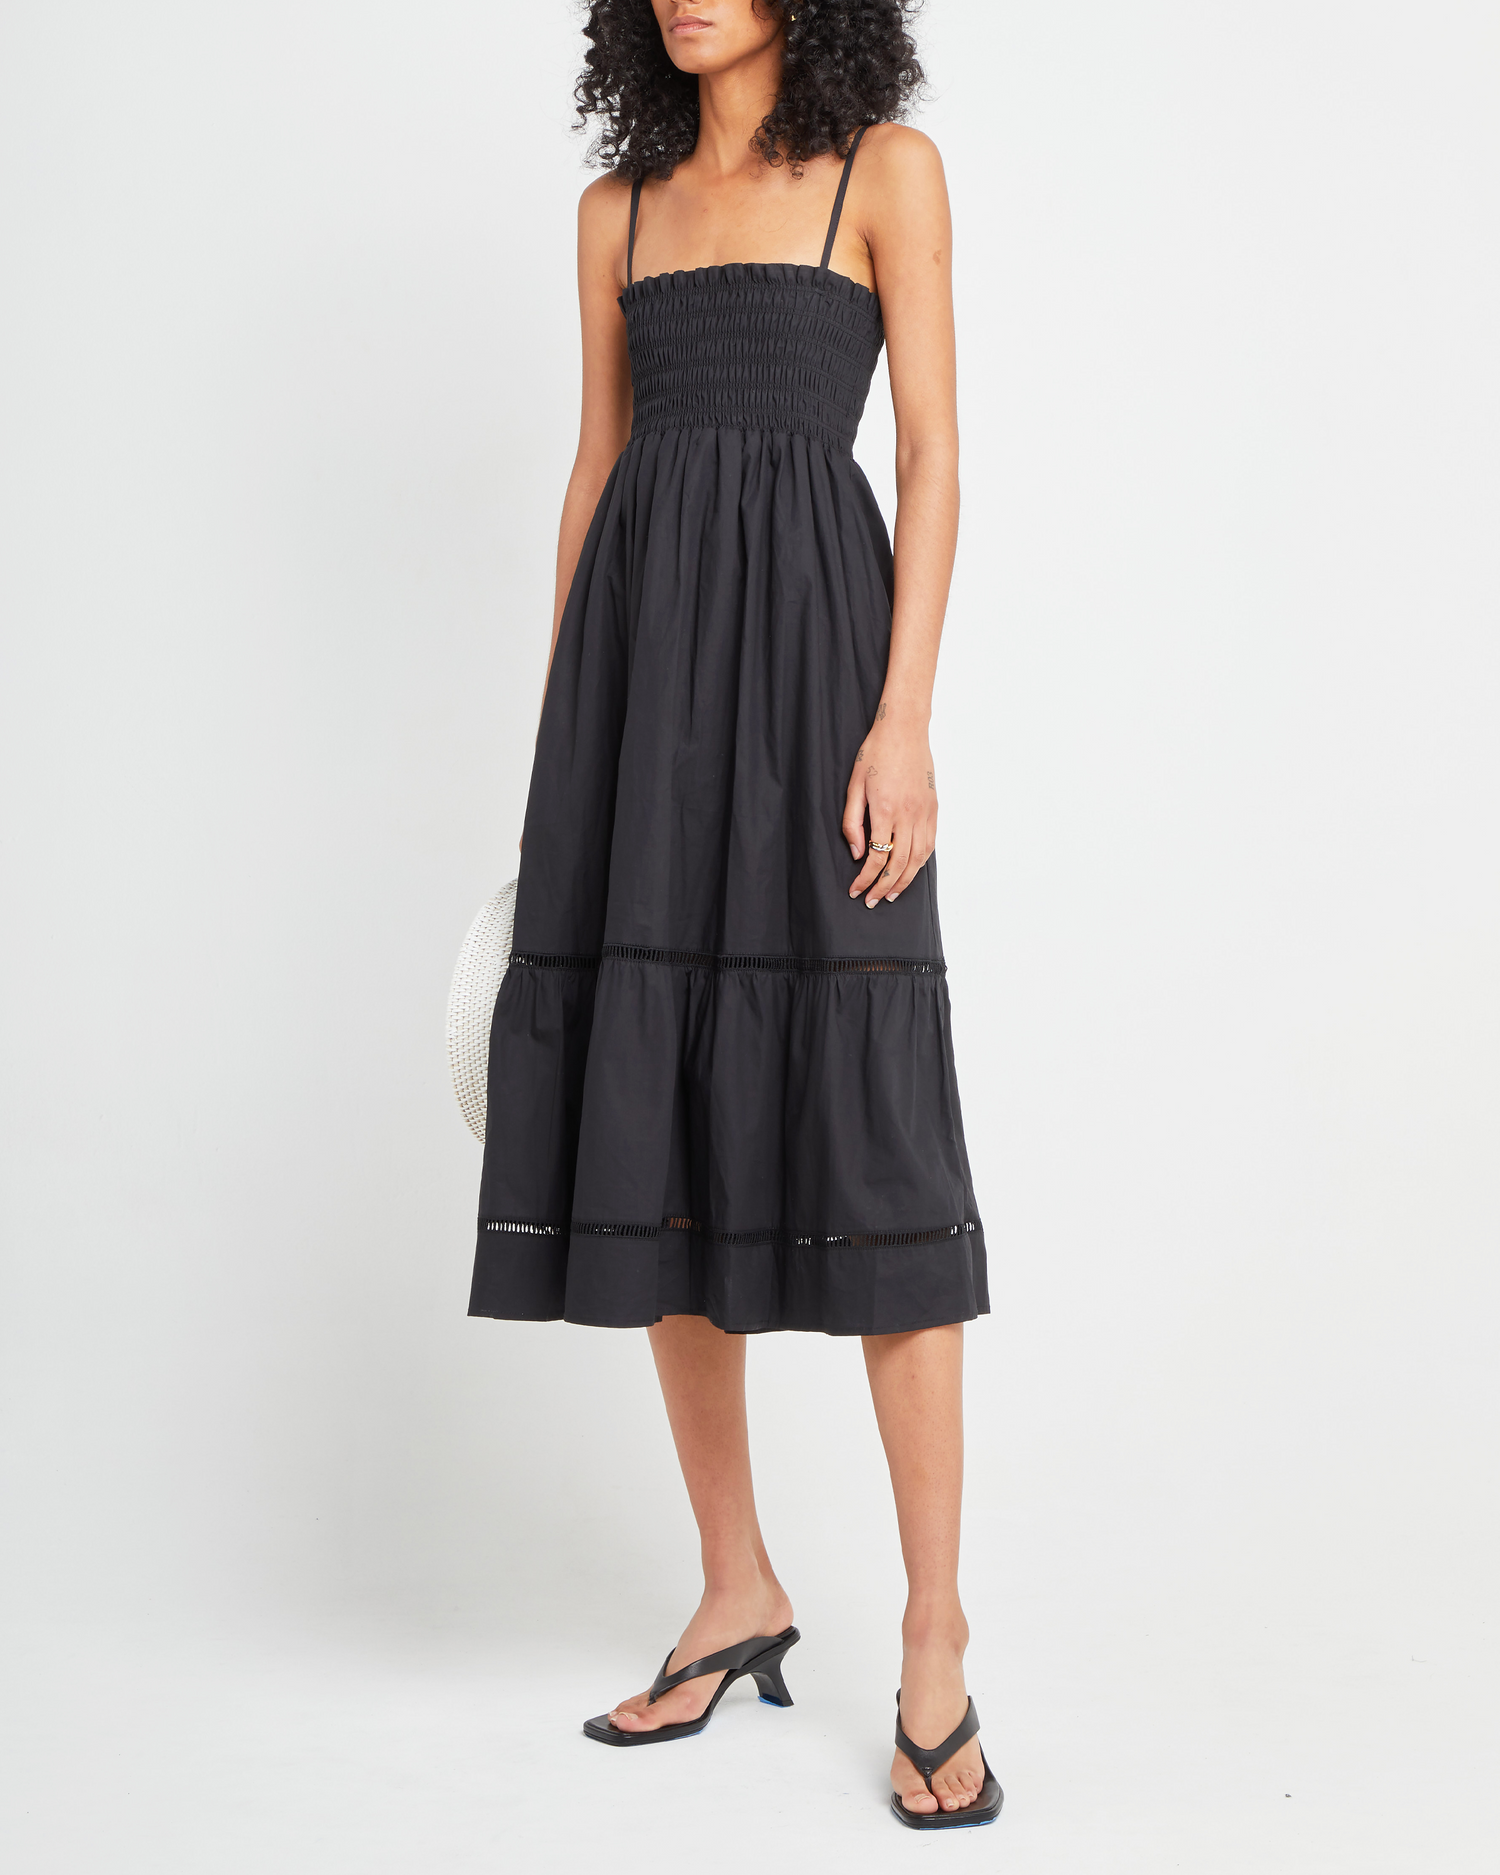 Sixth image of Cotton Leila Dress, a black midi dress, spaghetti strap, smocked bodice, tiered skirt